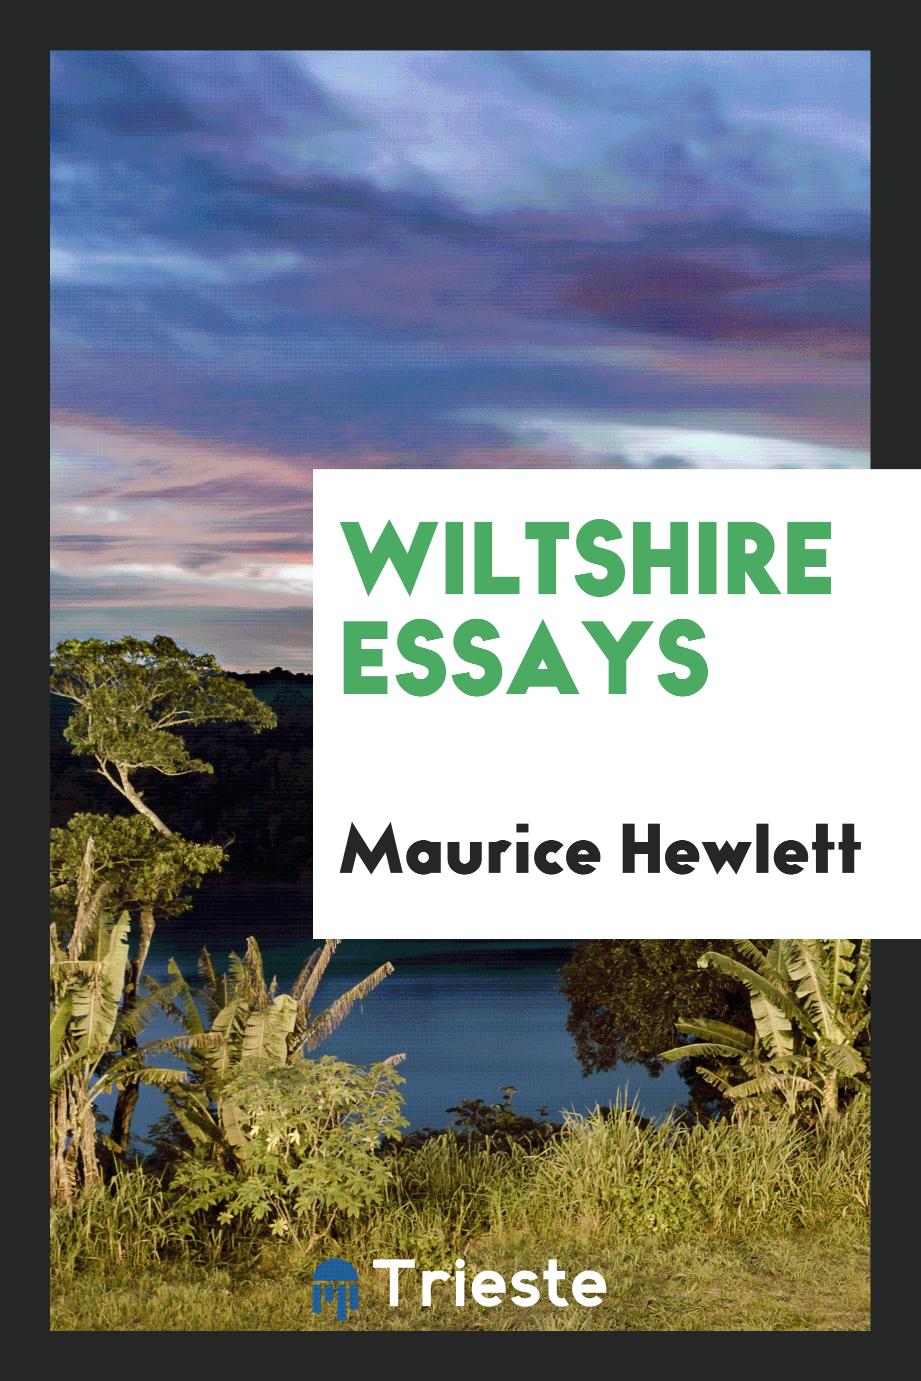 Wiltshire essays